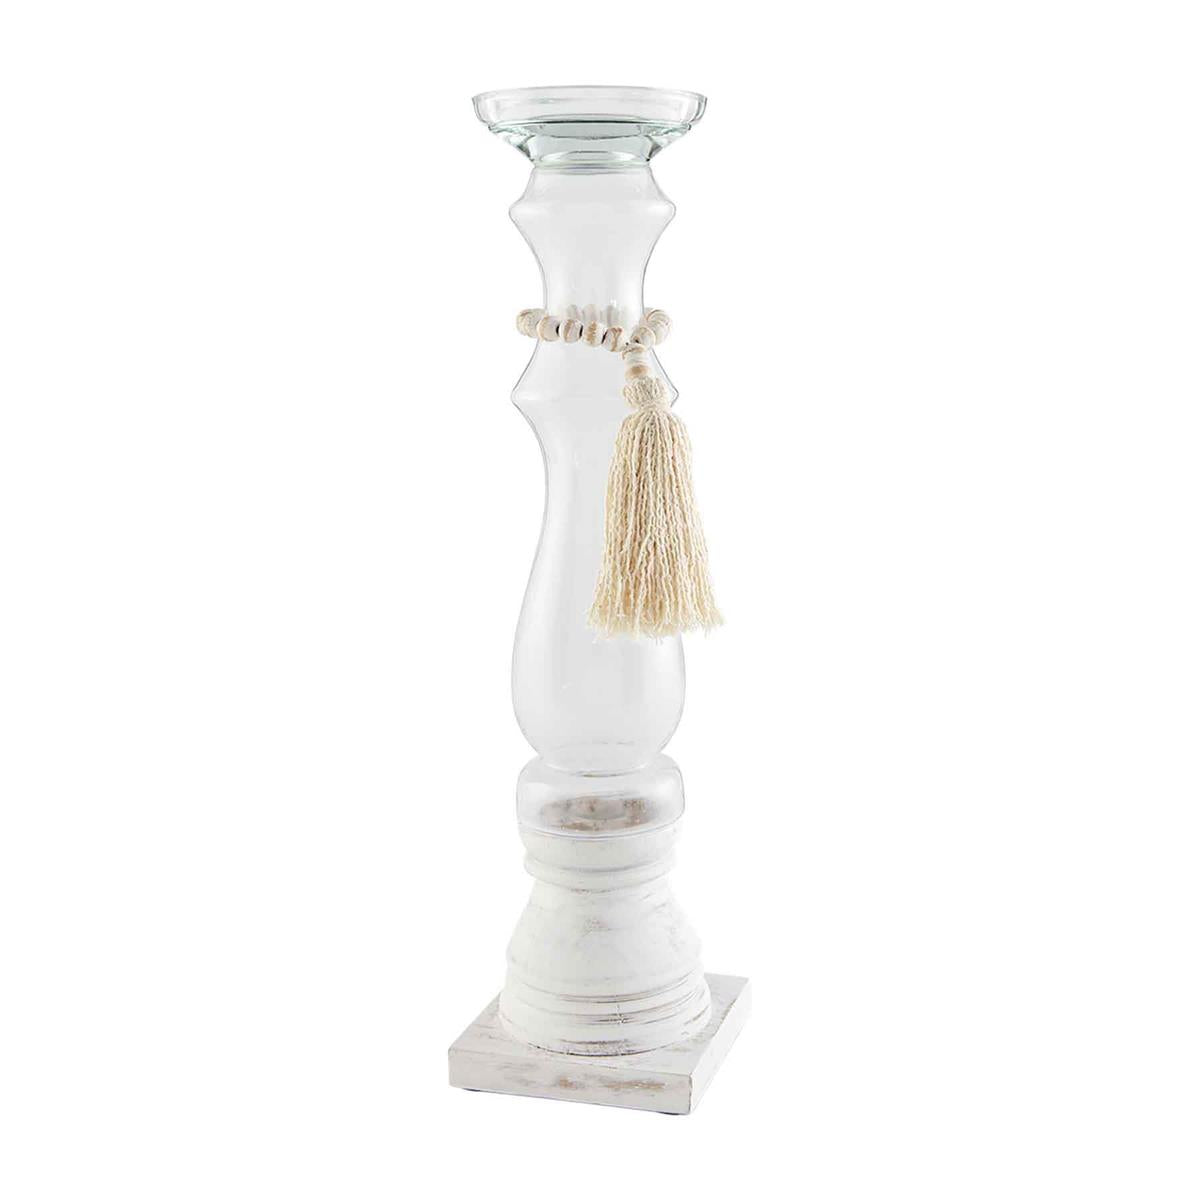 Wood & Glass Bead Candlestick - Large 15